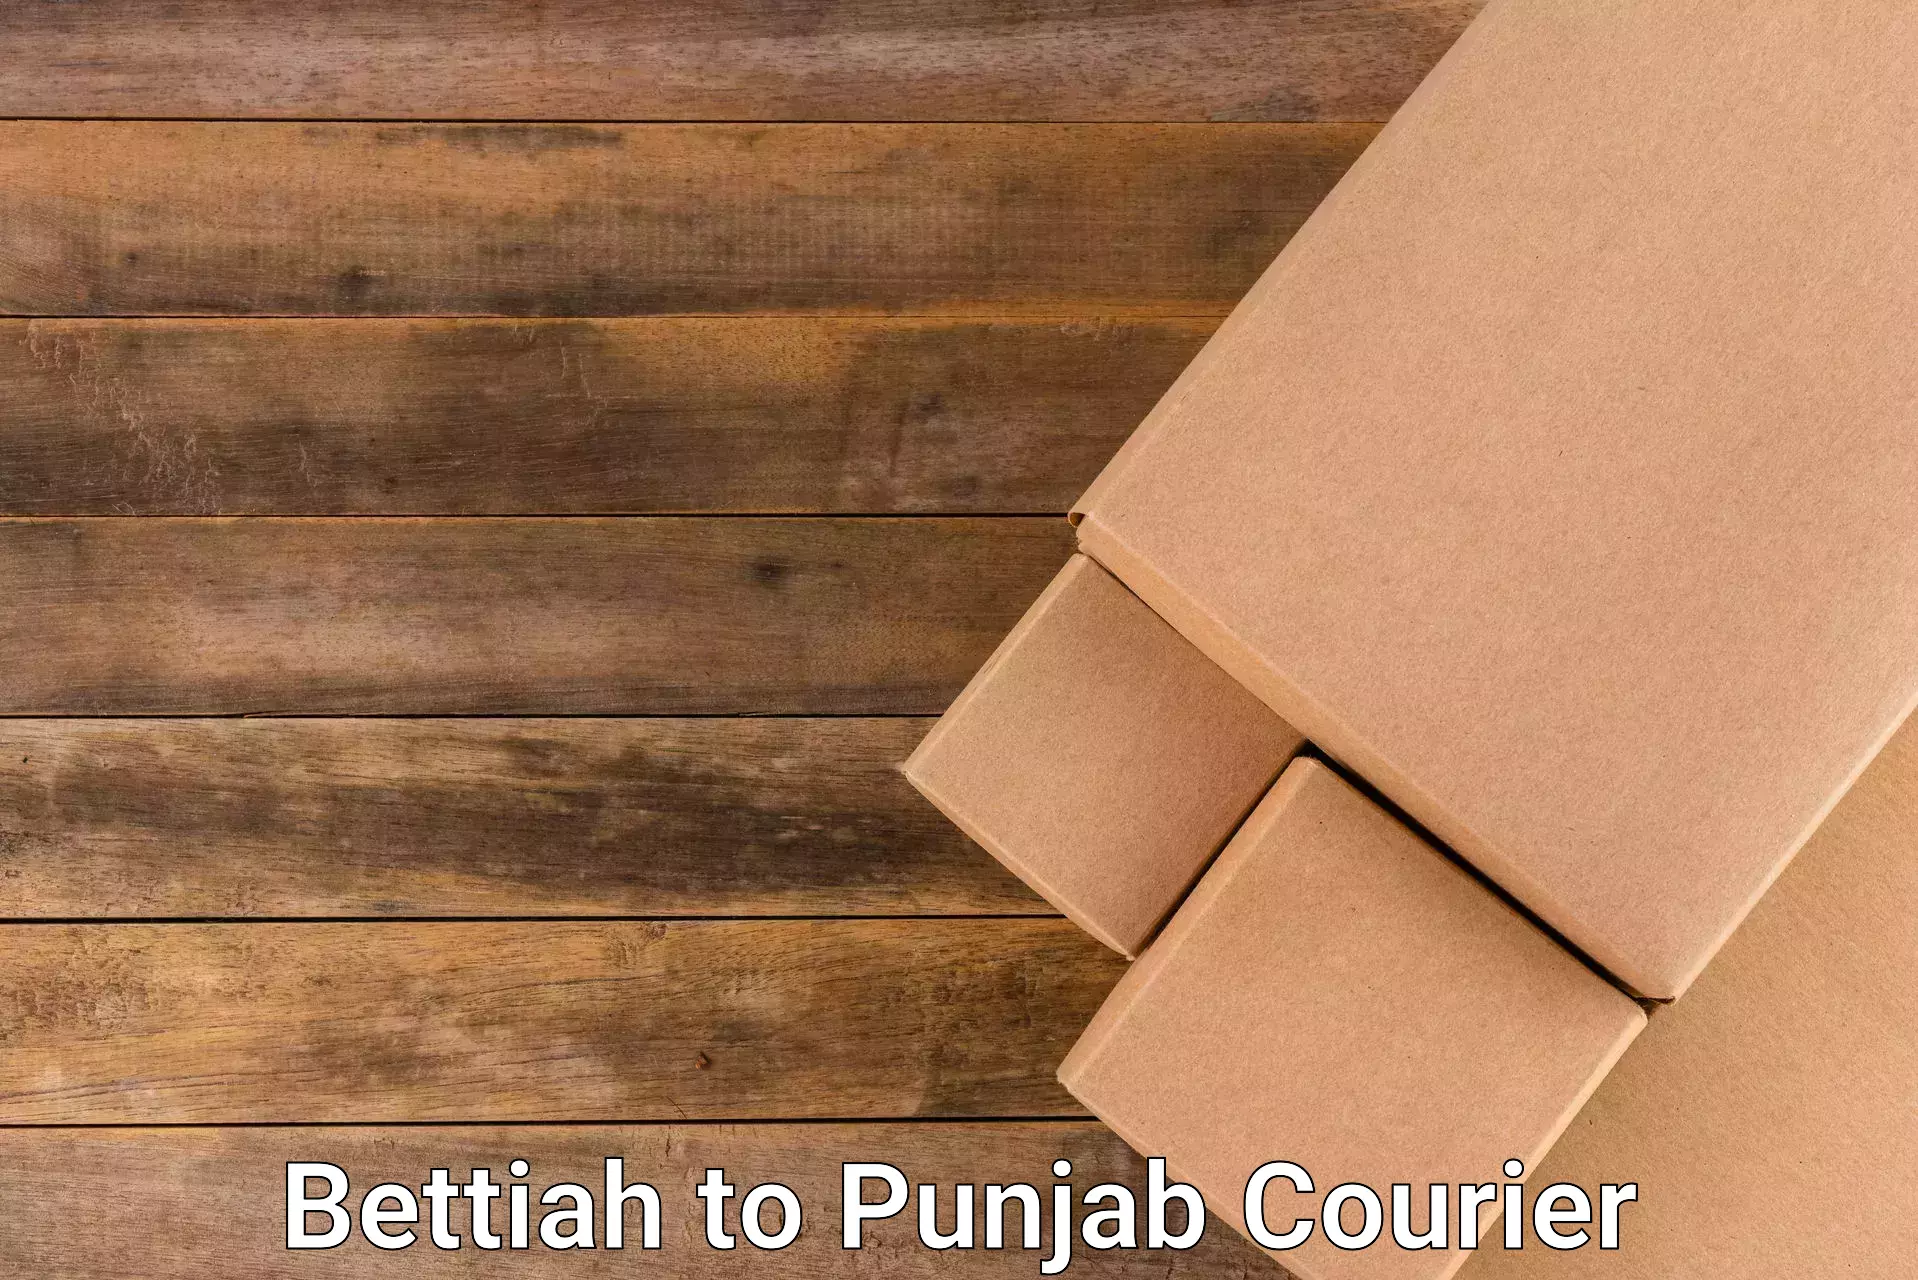 Pharmaceutical courier Bettiah to Punjab